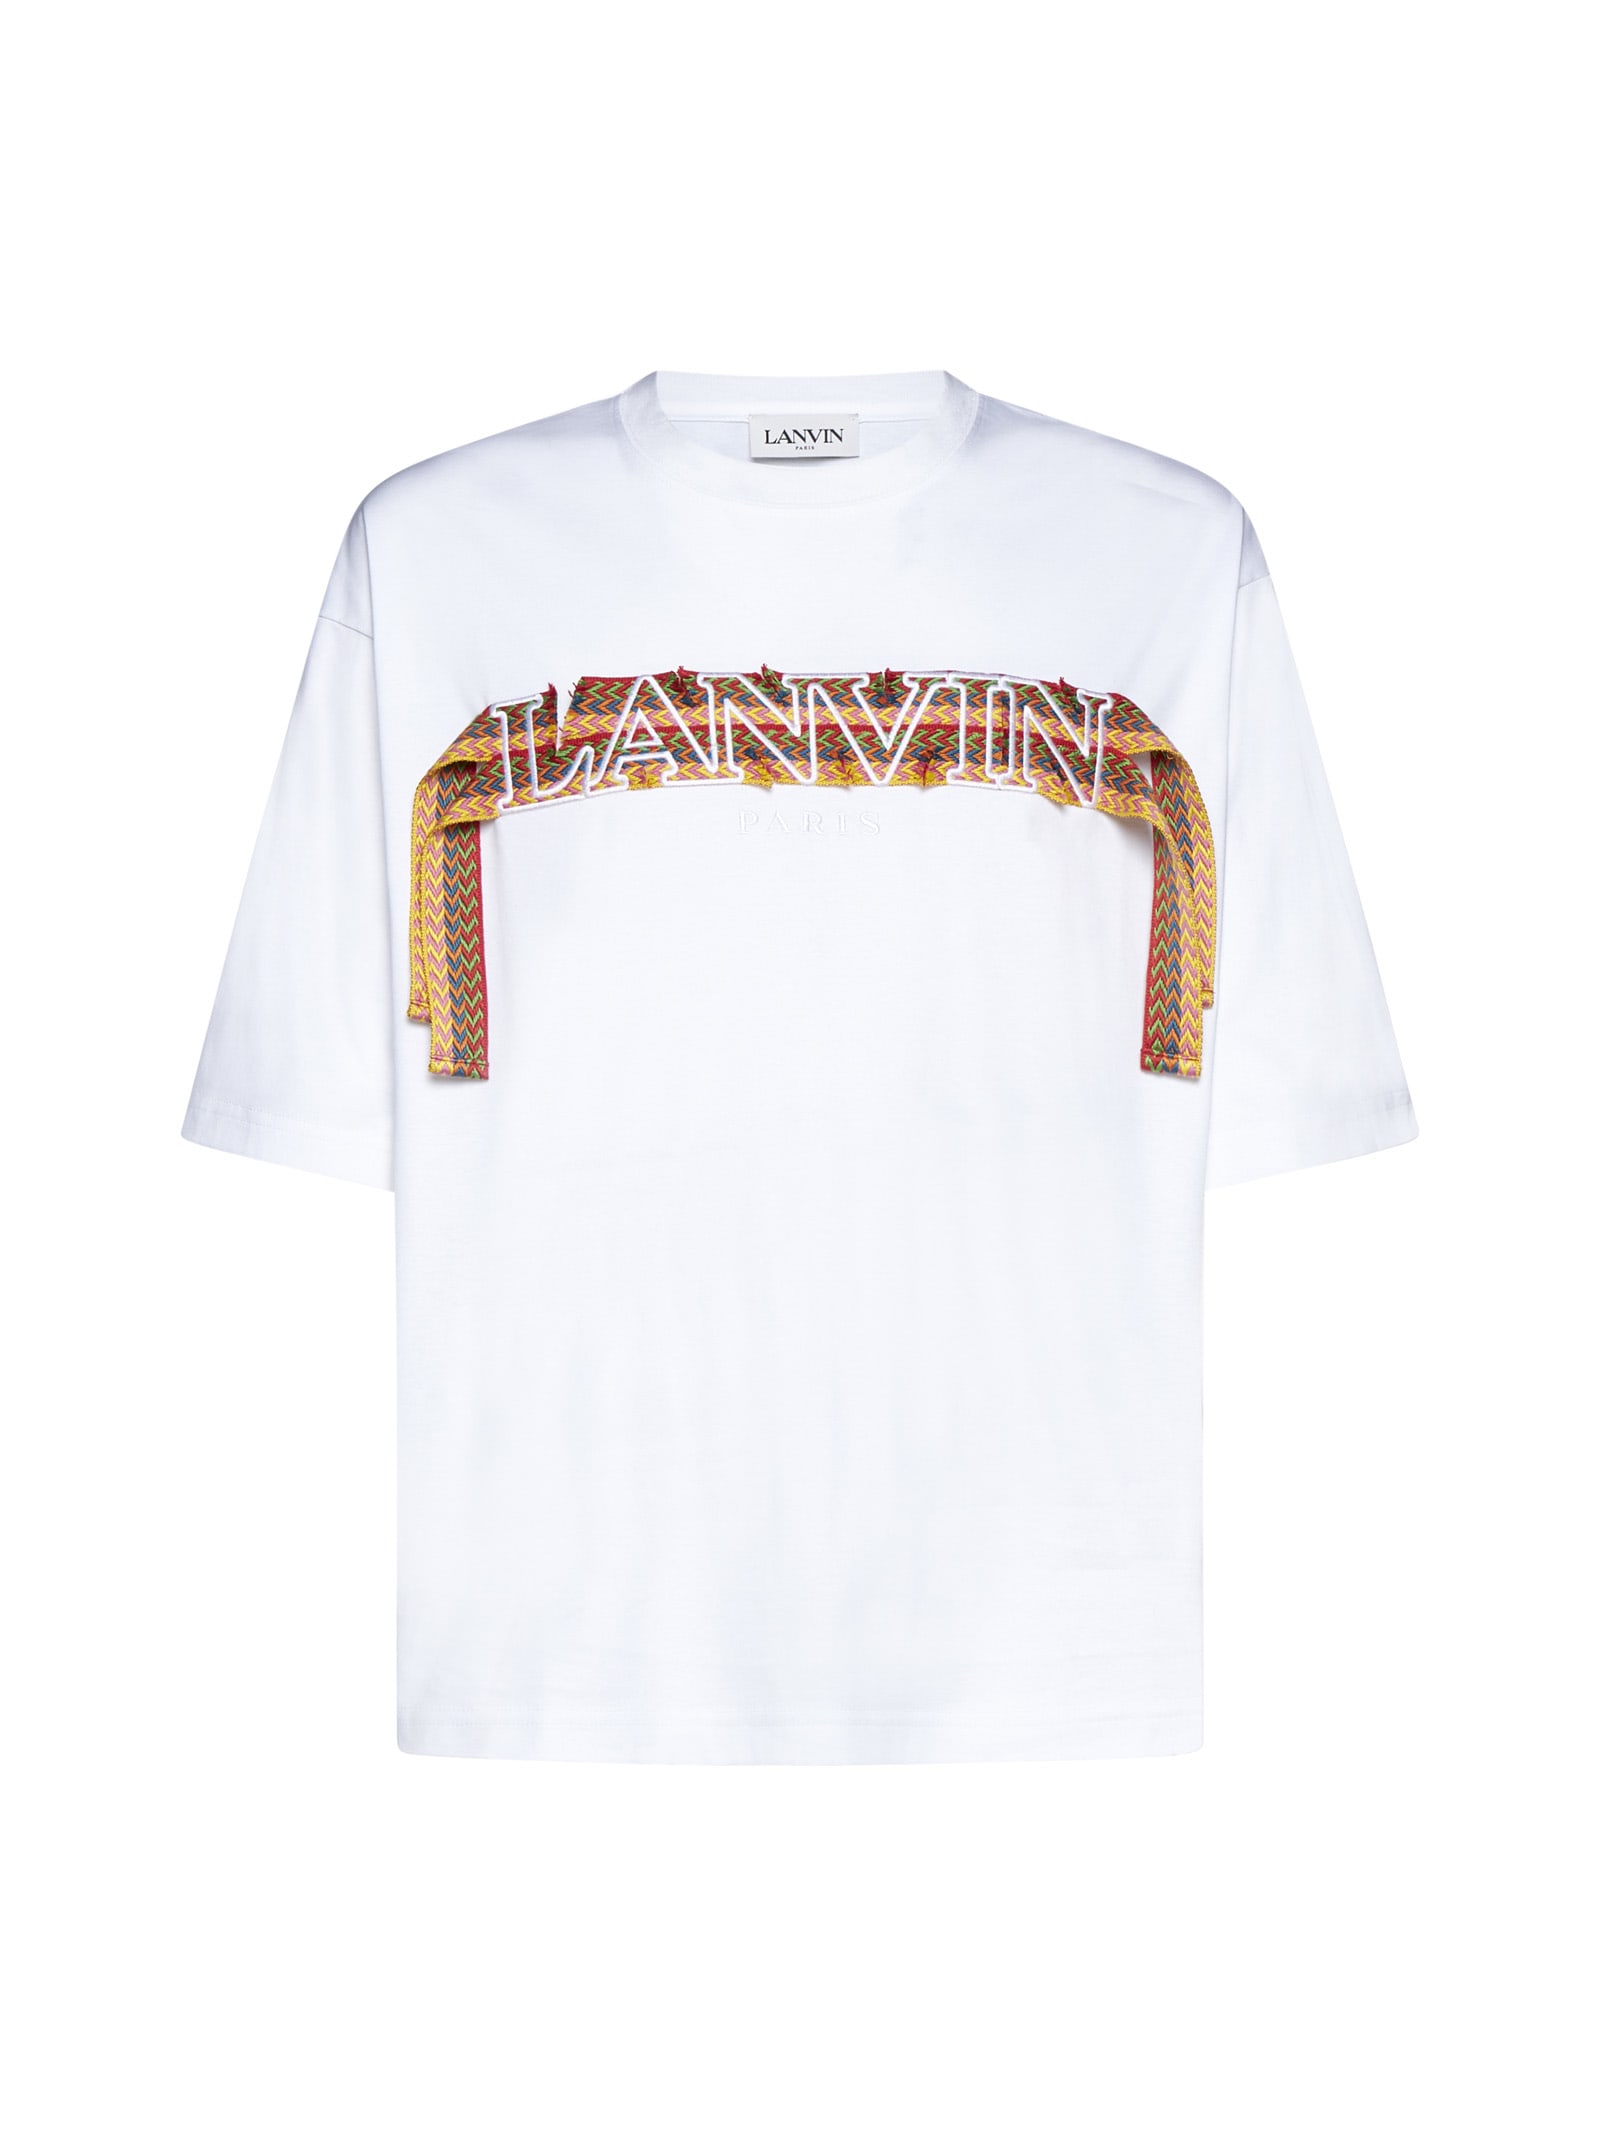 Lanvin T-shirt In White